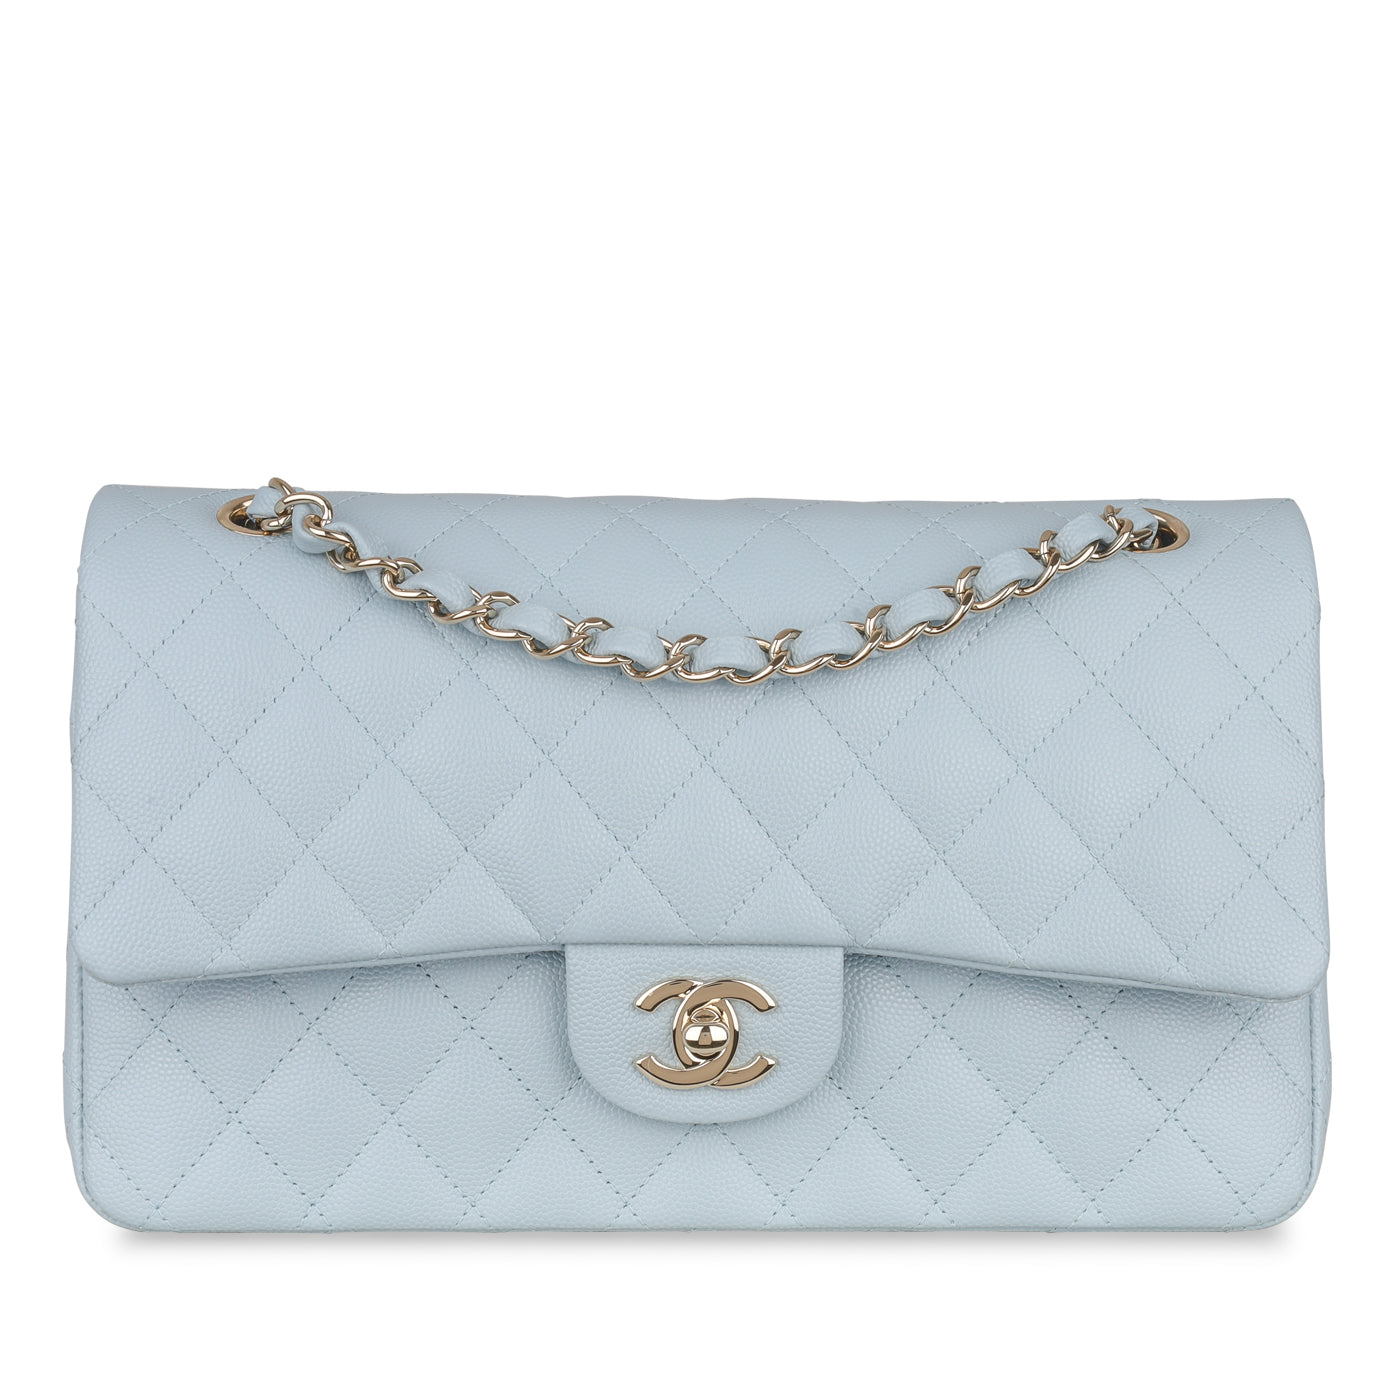 Chanel - Medium Classic Flap Bag - Baby Blue Caviar - Pre-Loved